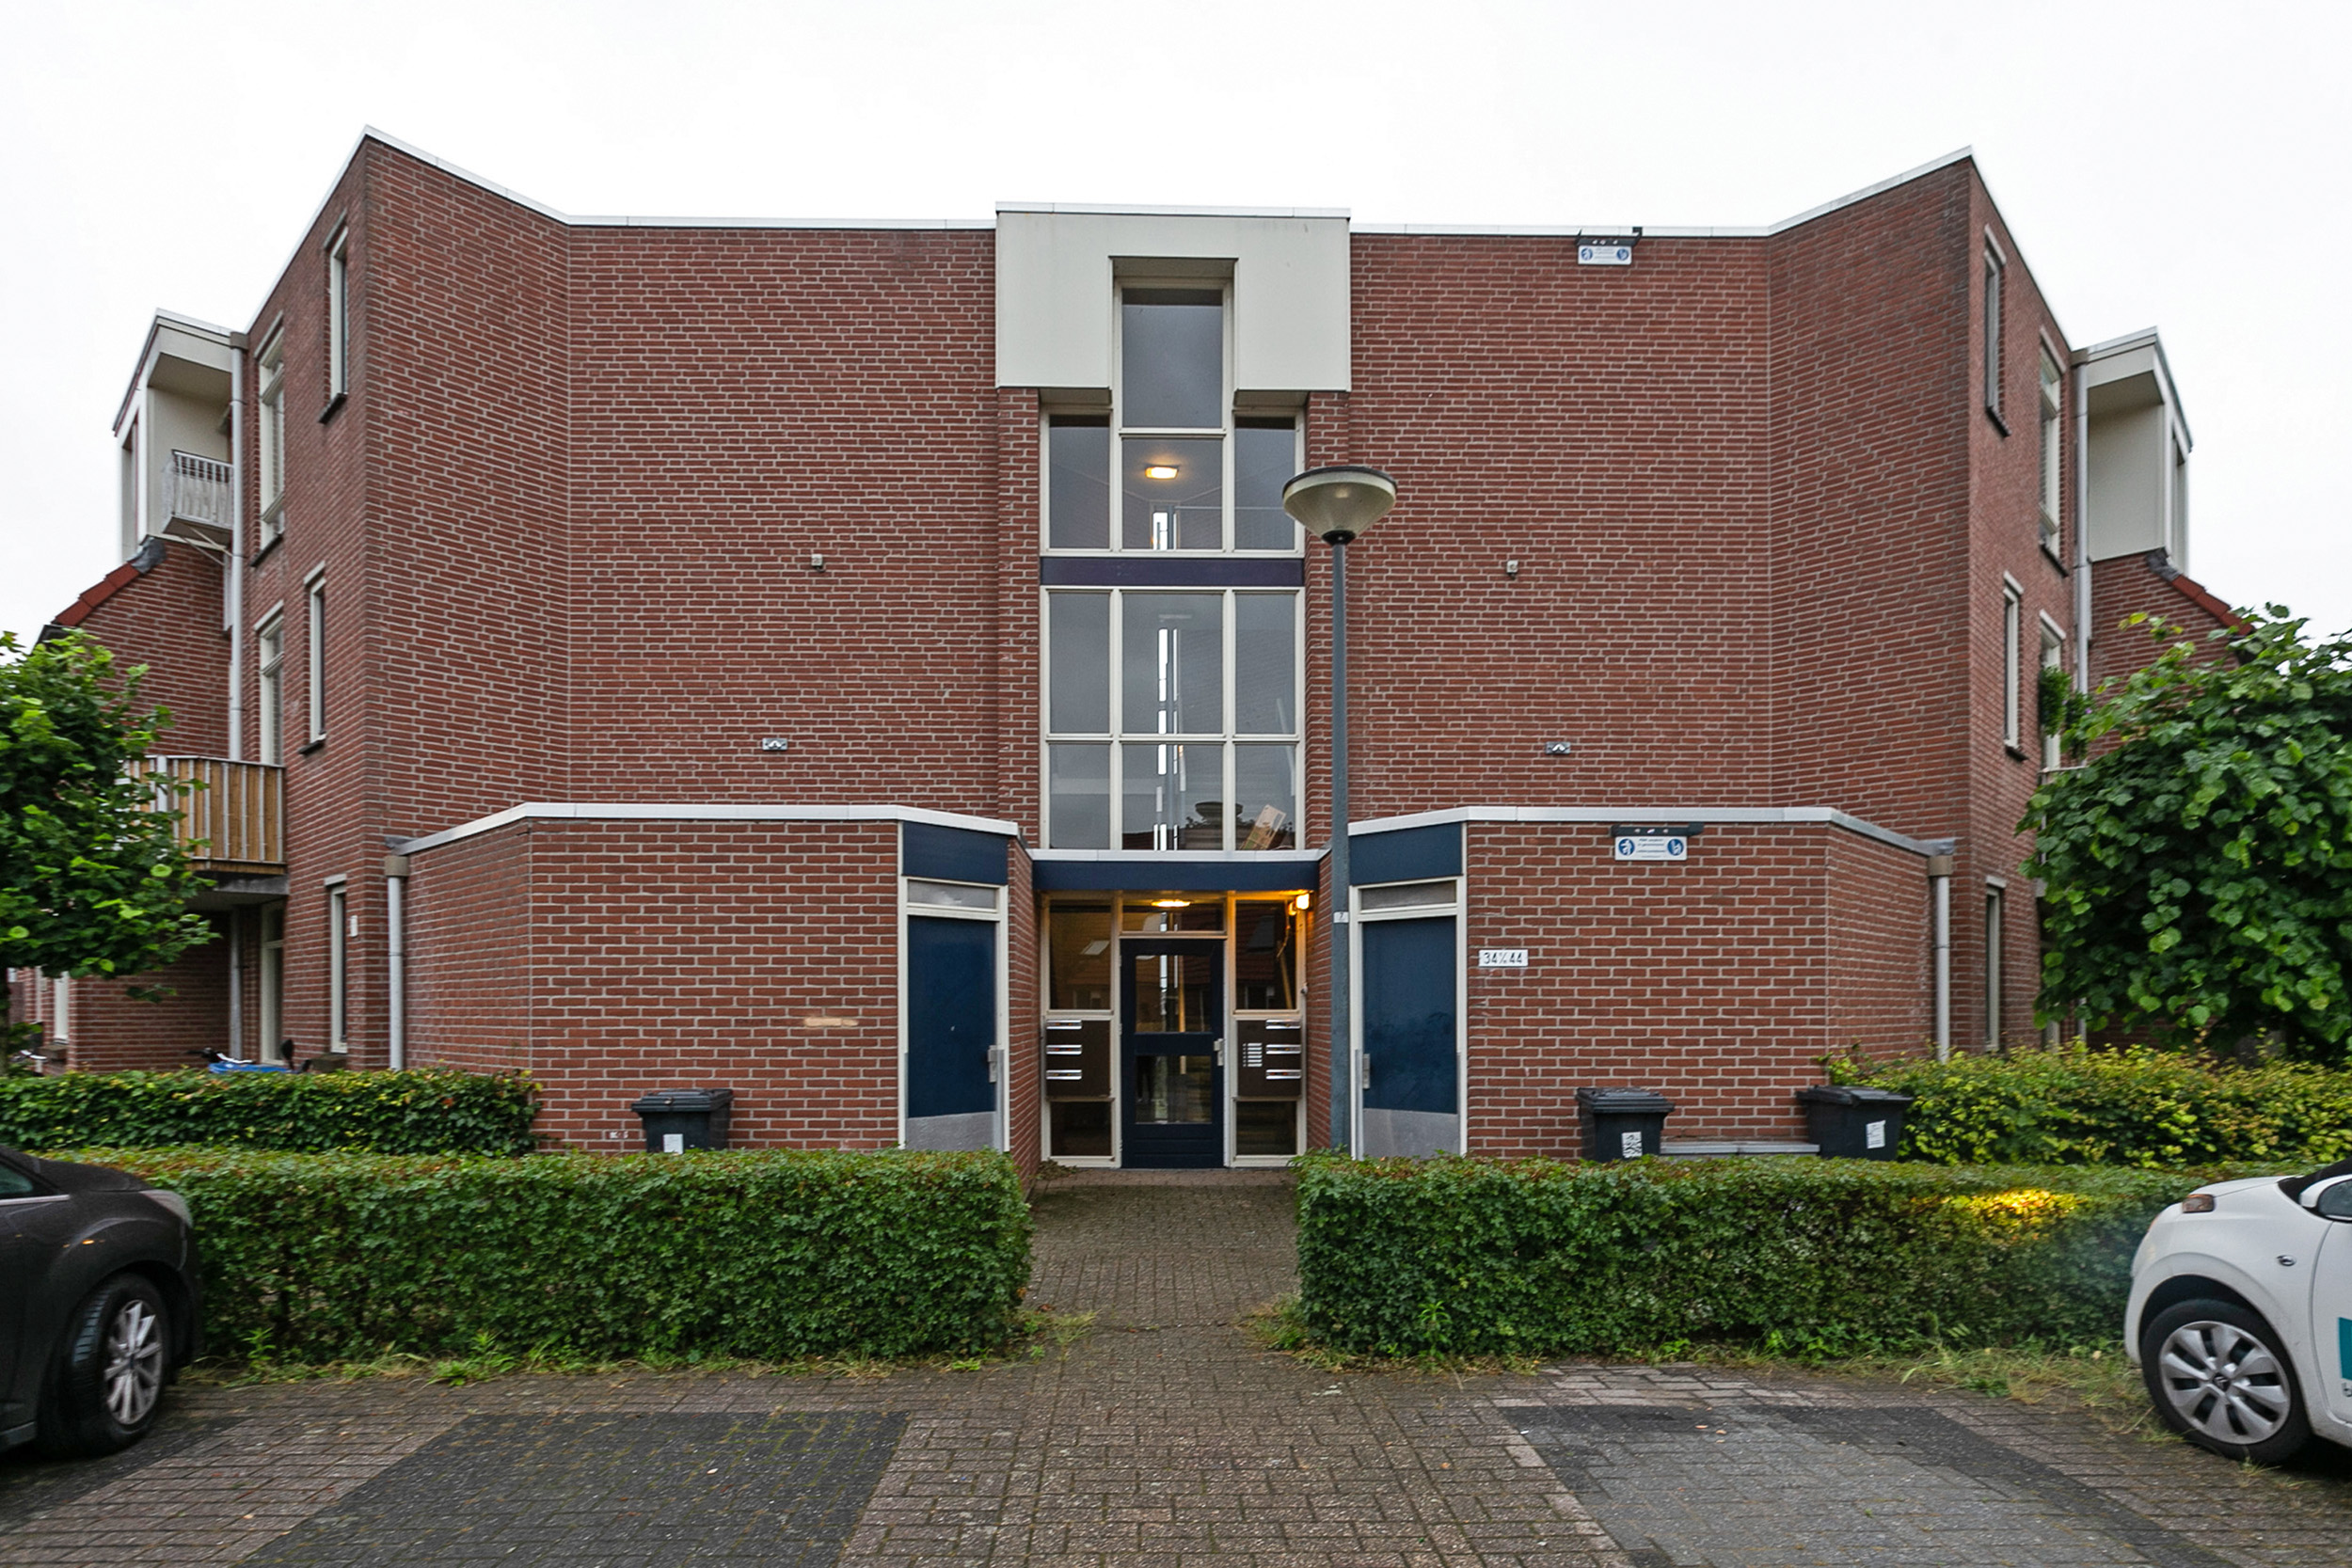 Zuiderbeemd 36, 4907 EM Oosterhout, Nederland